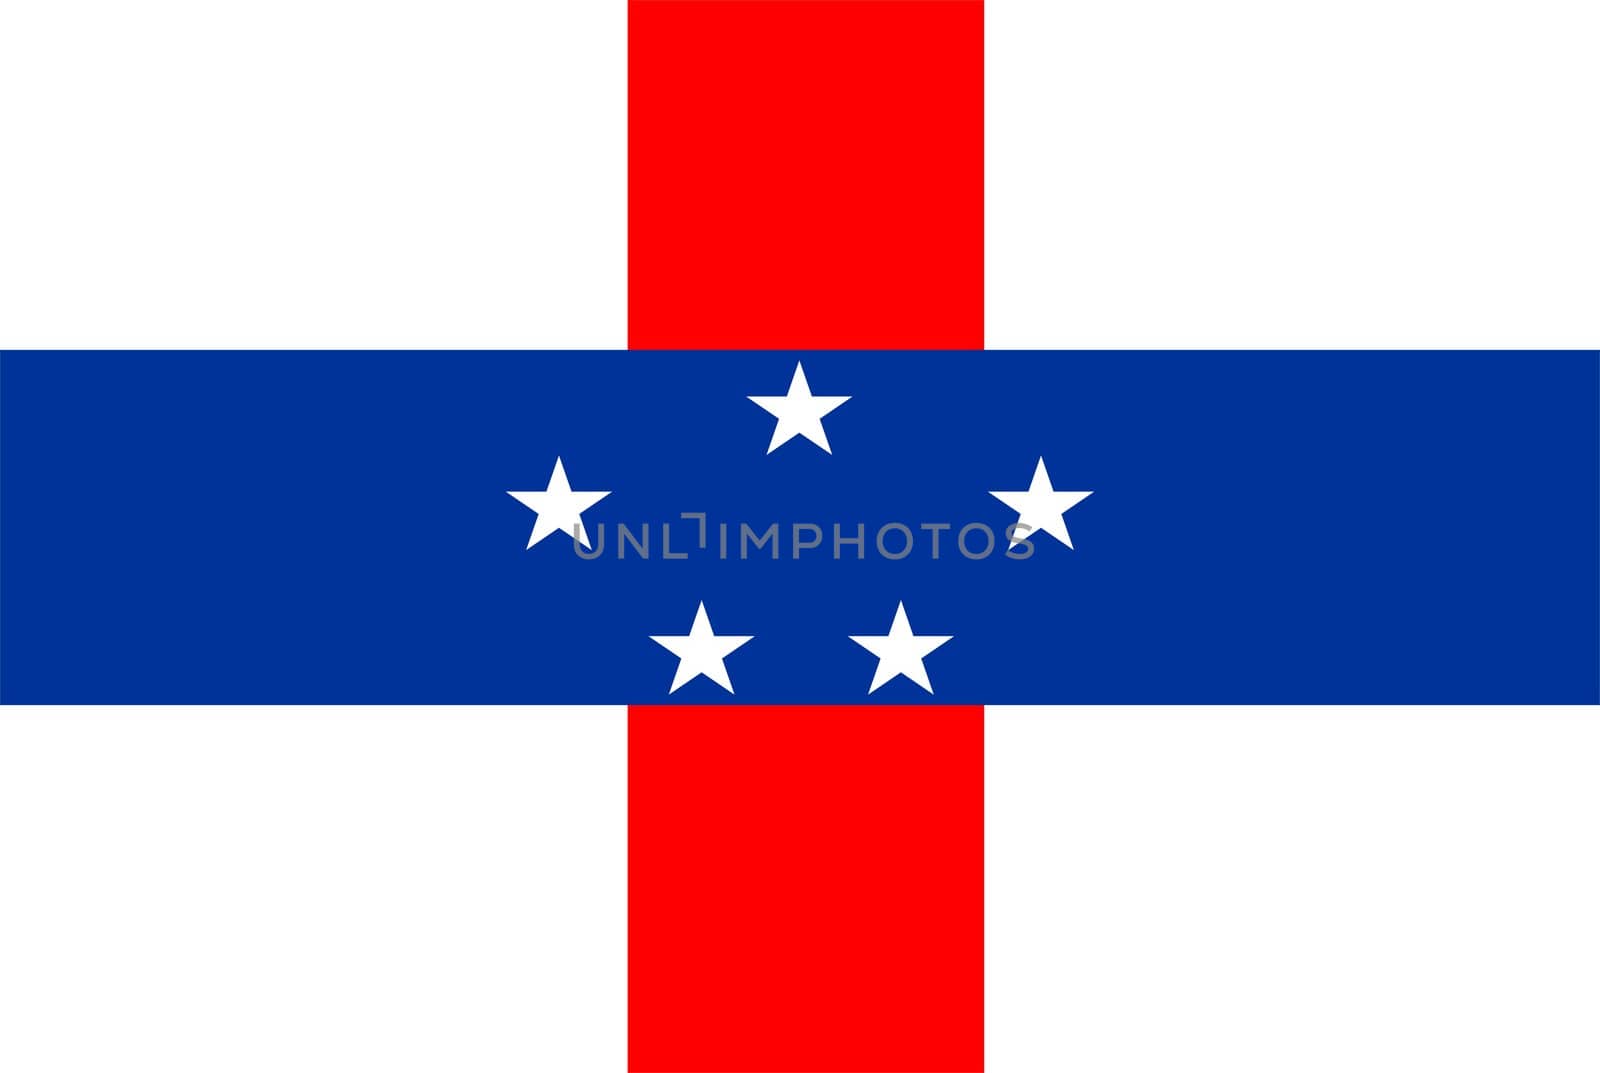 Netherlands Antilles Flag by tony4urban